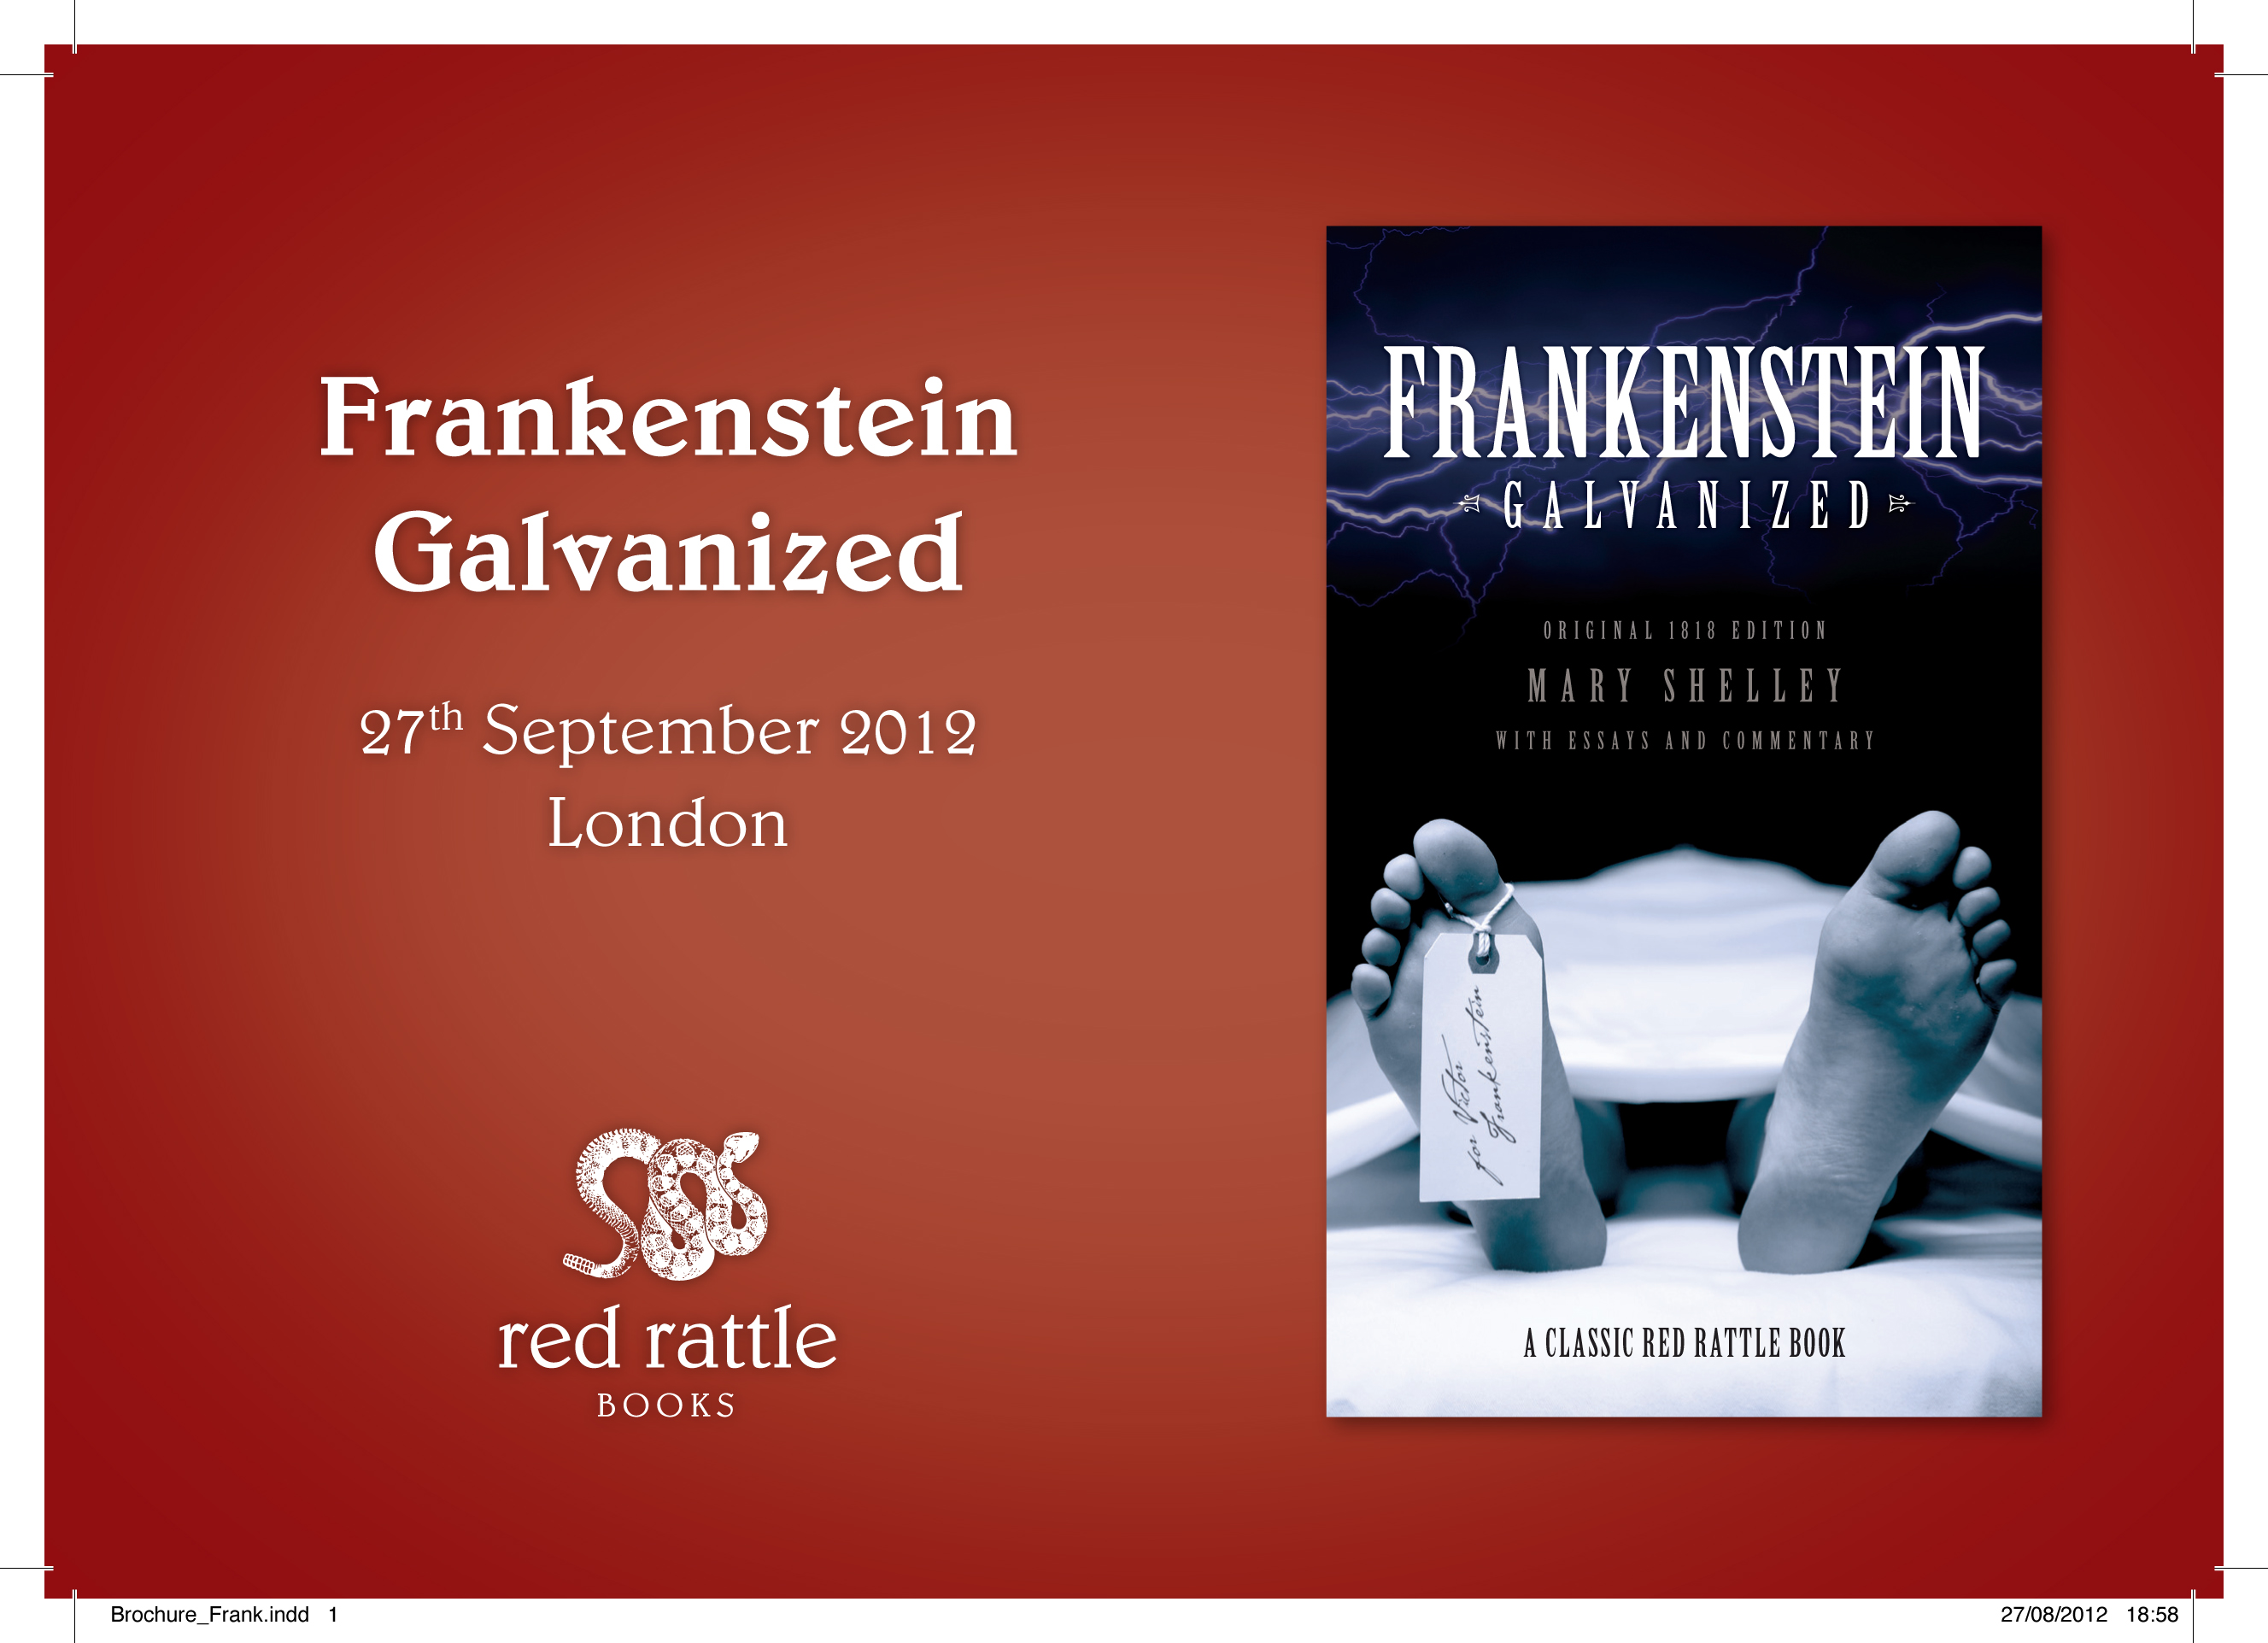 Buy Frankenstein Galvanized from Amazon.com